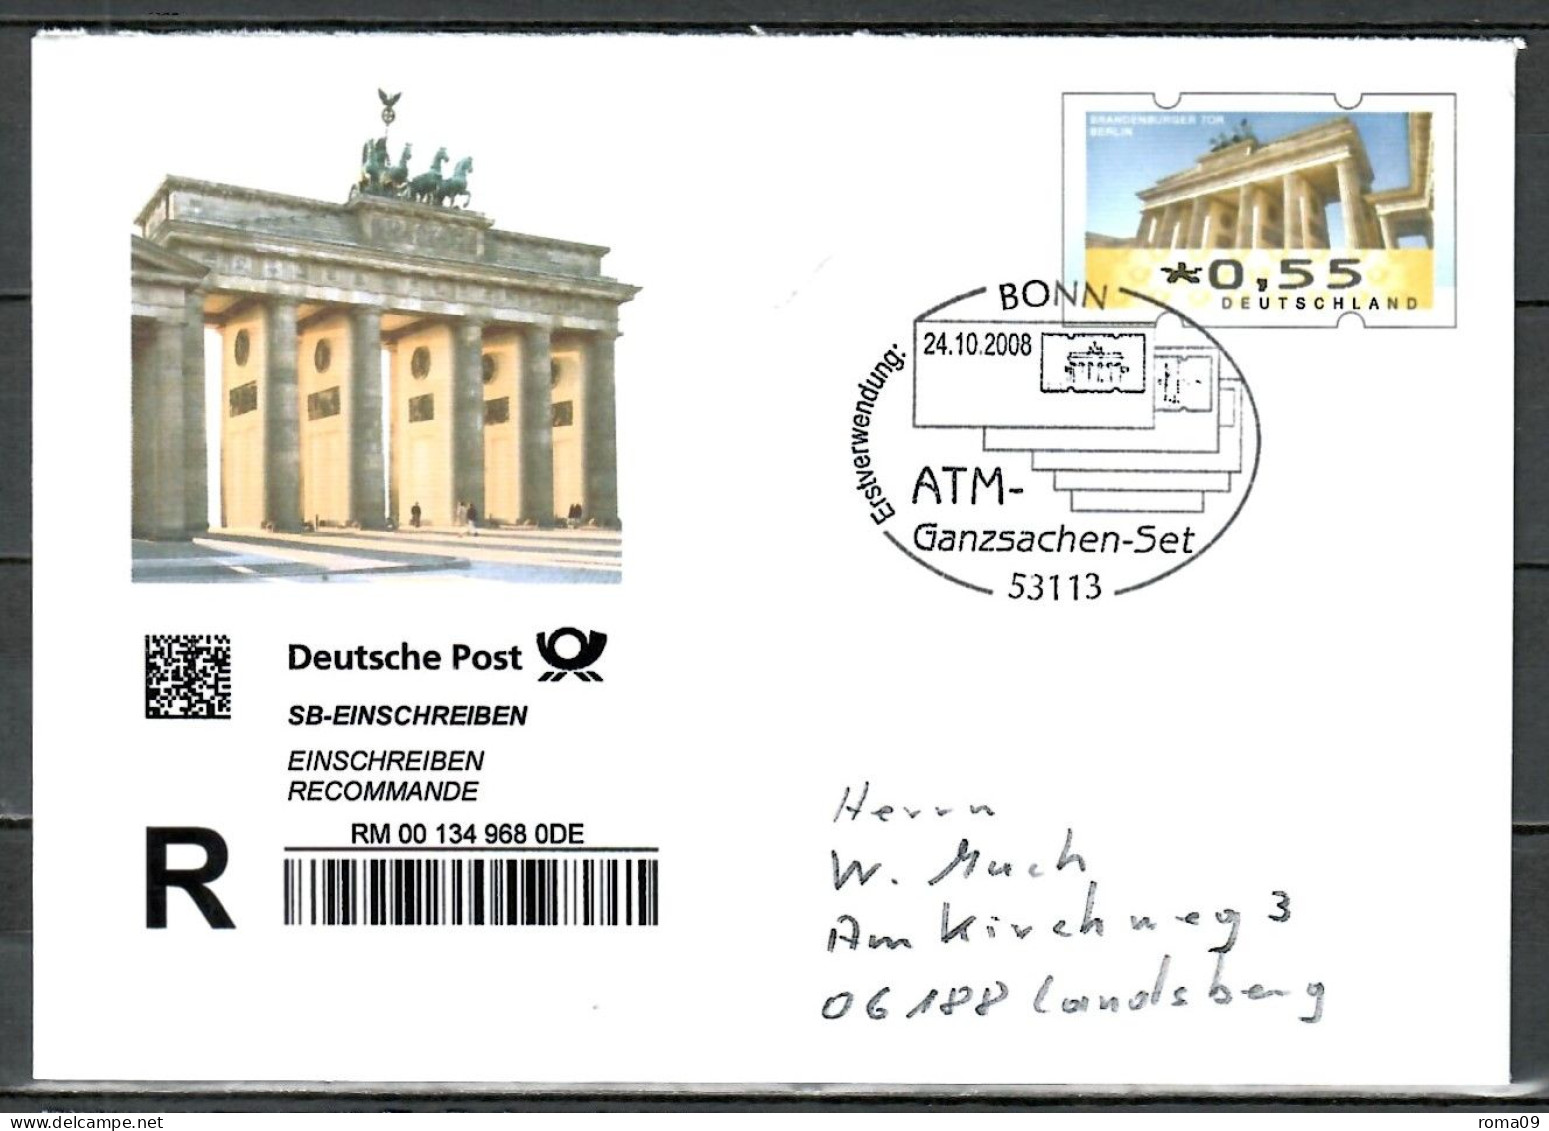 MiNr. USo 169 (ATM - Brandenburger Tor), SoSt. ATM-Ganzsache, Erstverwendung; B-274 - Covers - Used